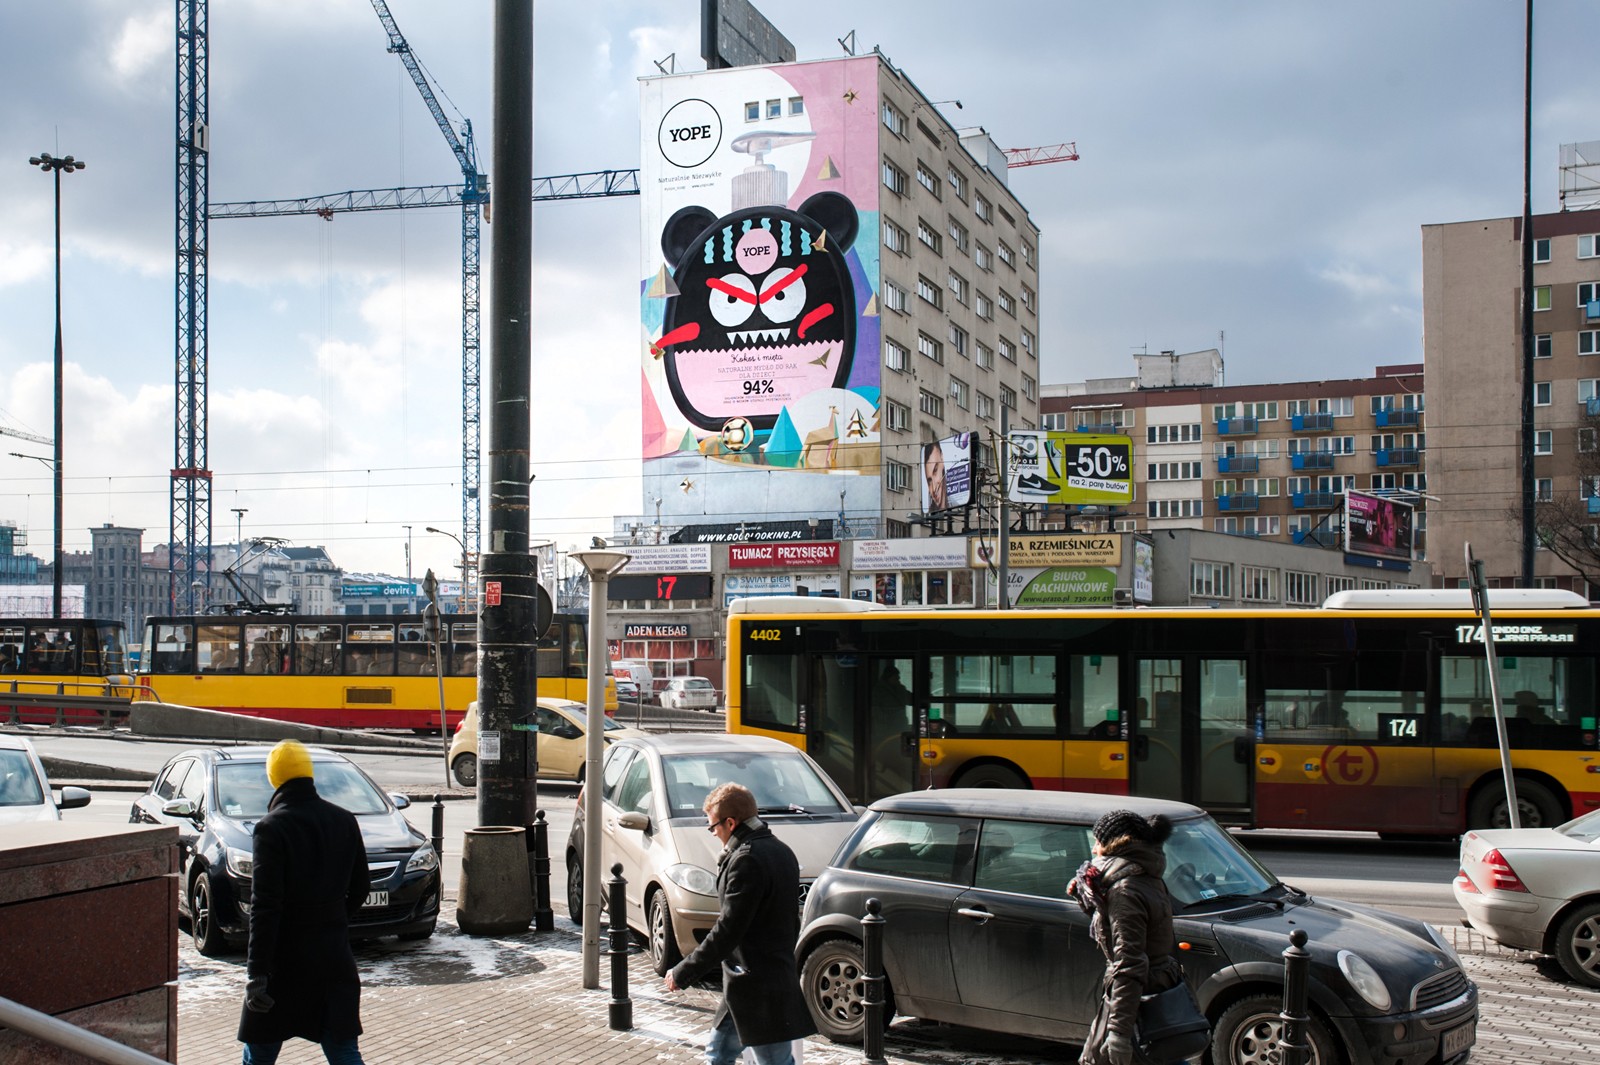 An advertising mural on chmielna 98 in Warsaw | YOPE | Portfolio